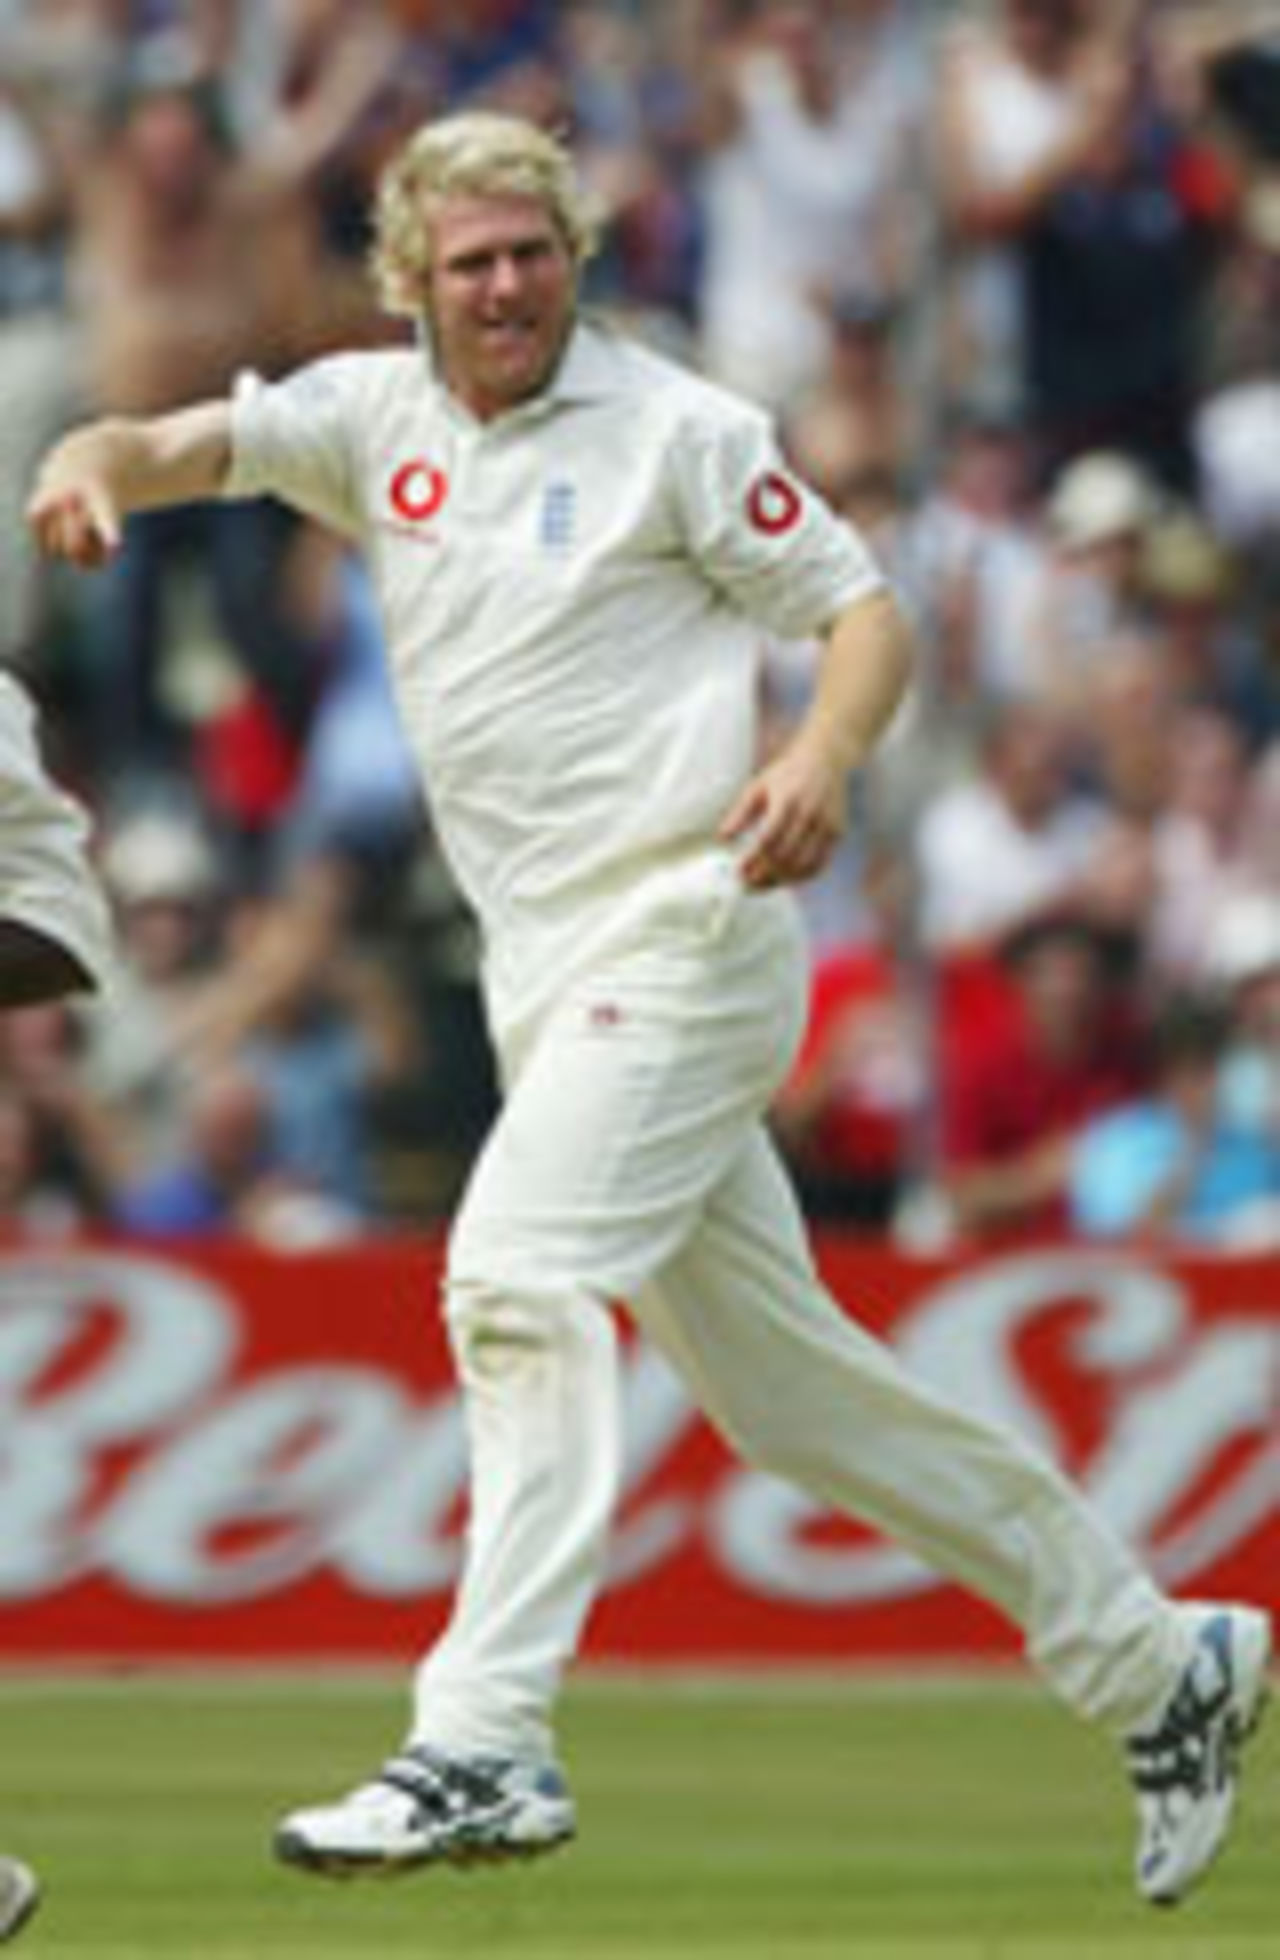 Matthew Hoggard celebrates the wicket of Ridley Jacobs, England v West Indies, 2nd Test, Edgbaston, July 31, 2004